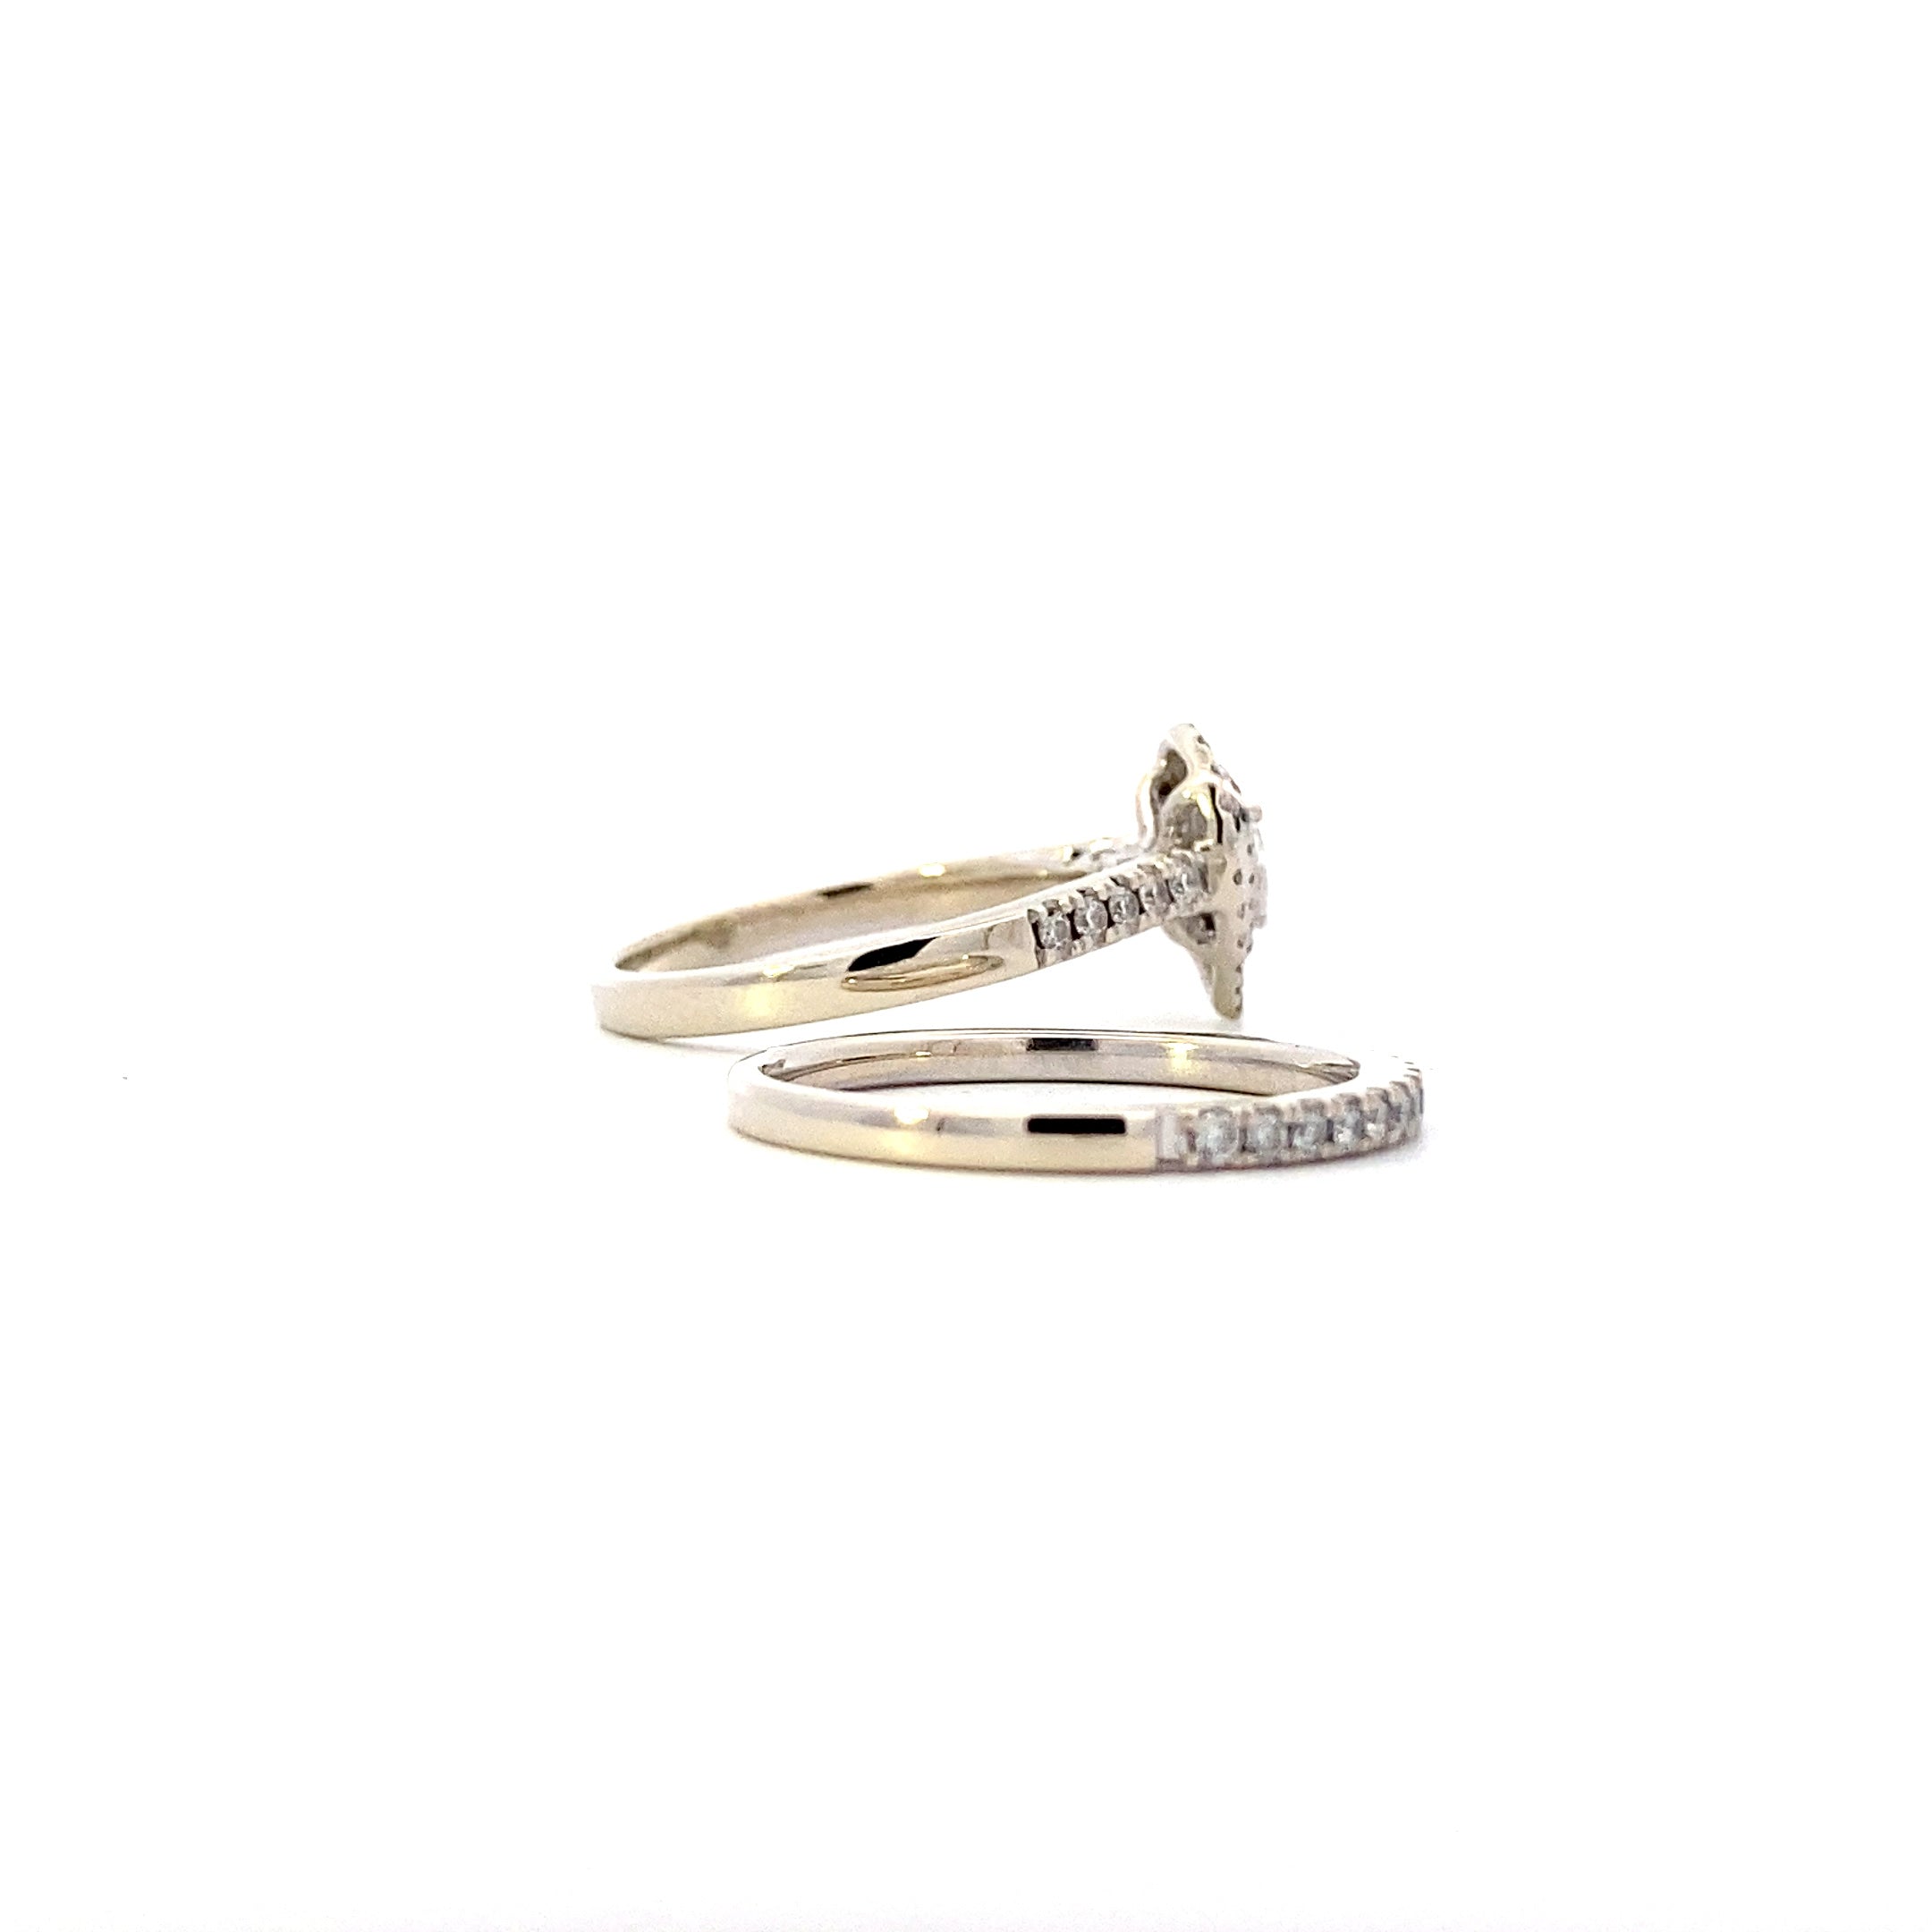 14K White Gold Diamond Engagement & Wedding Ring Set - 1.38ct